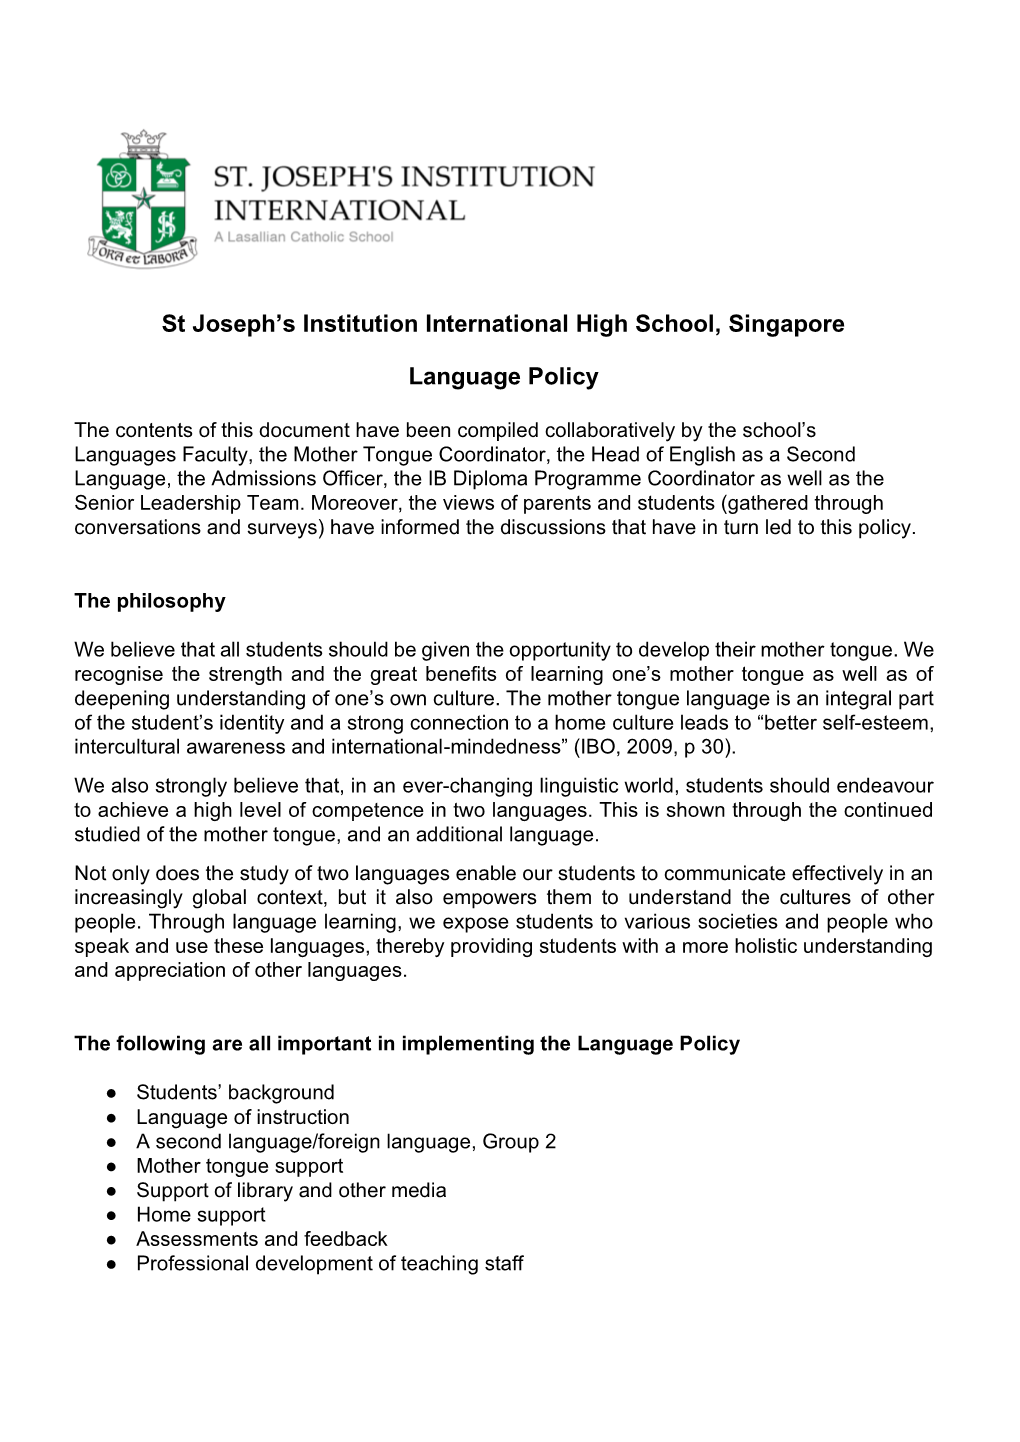 St Joseph's Institution International High School, Singapore Language